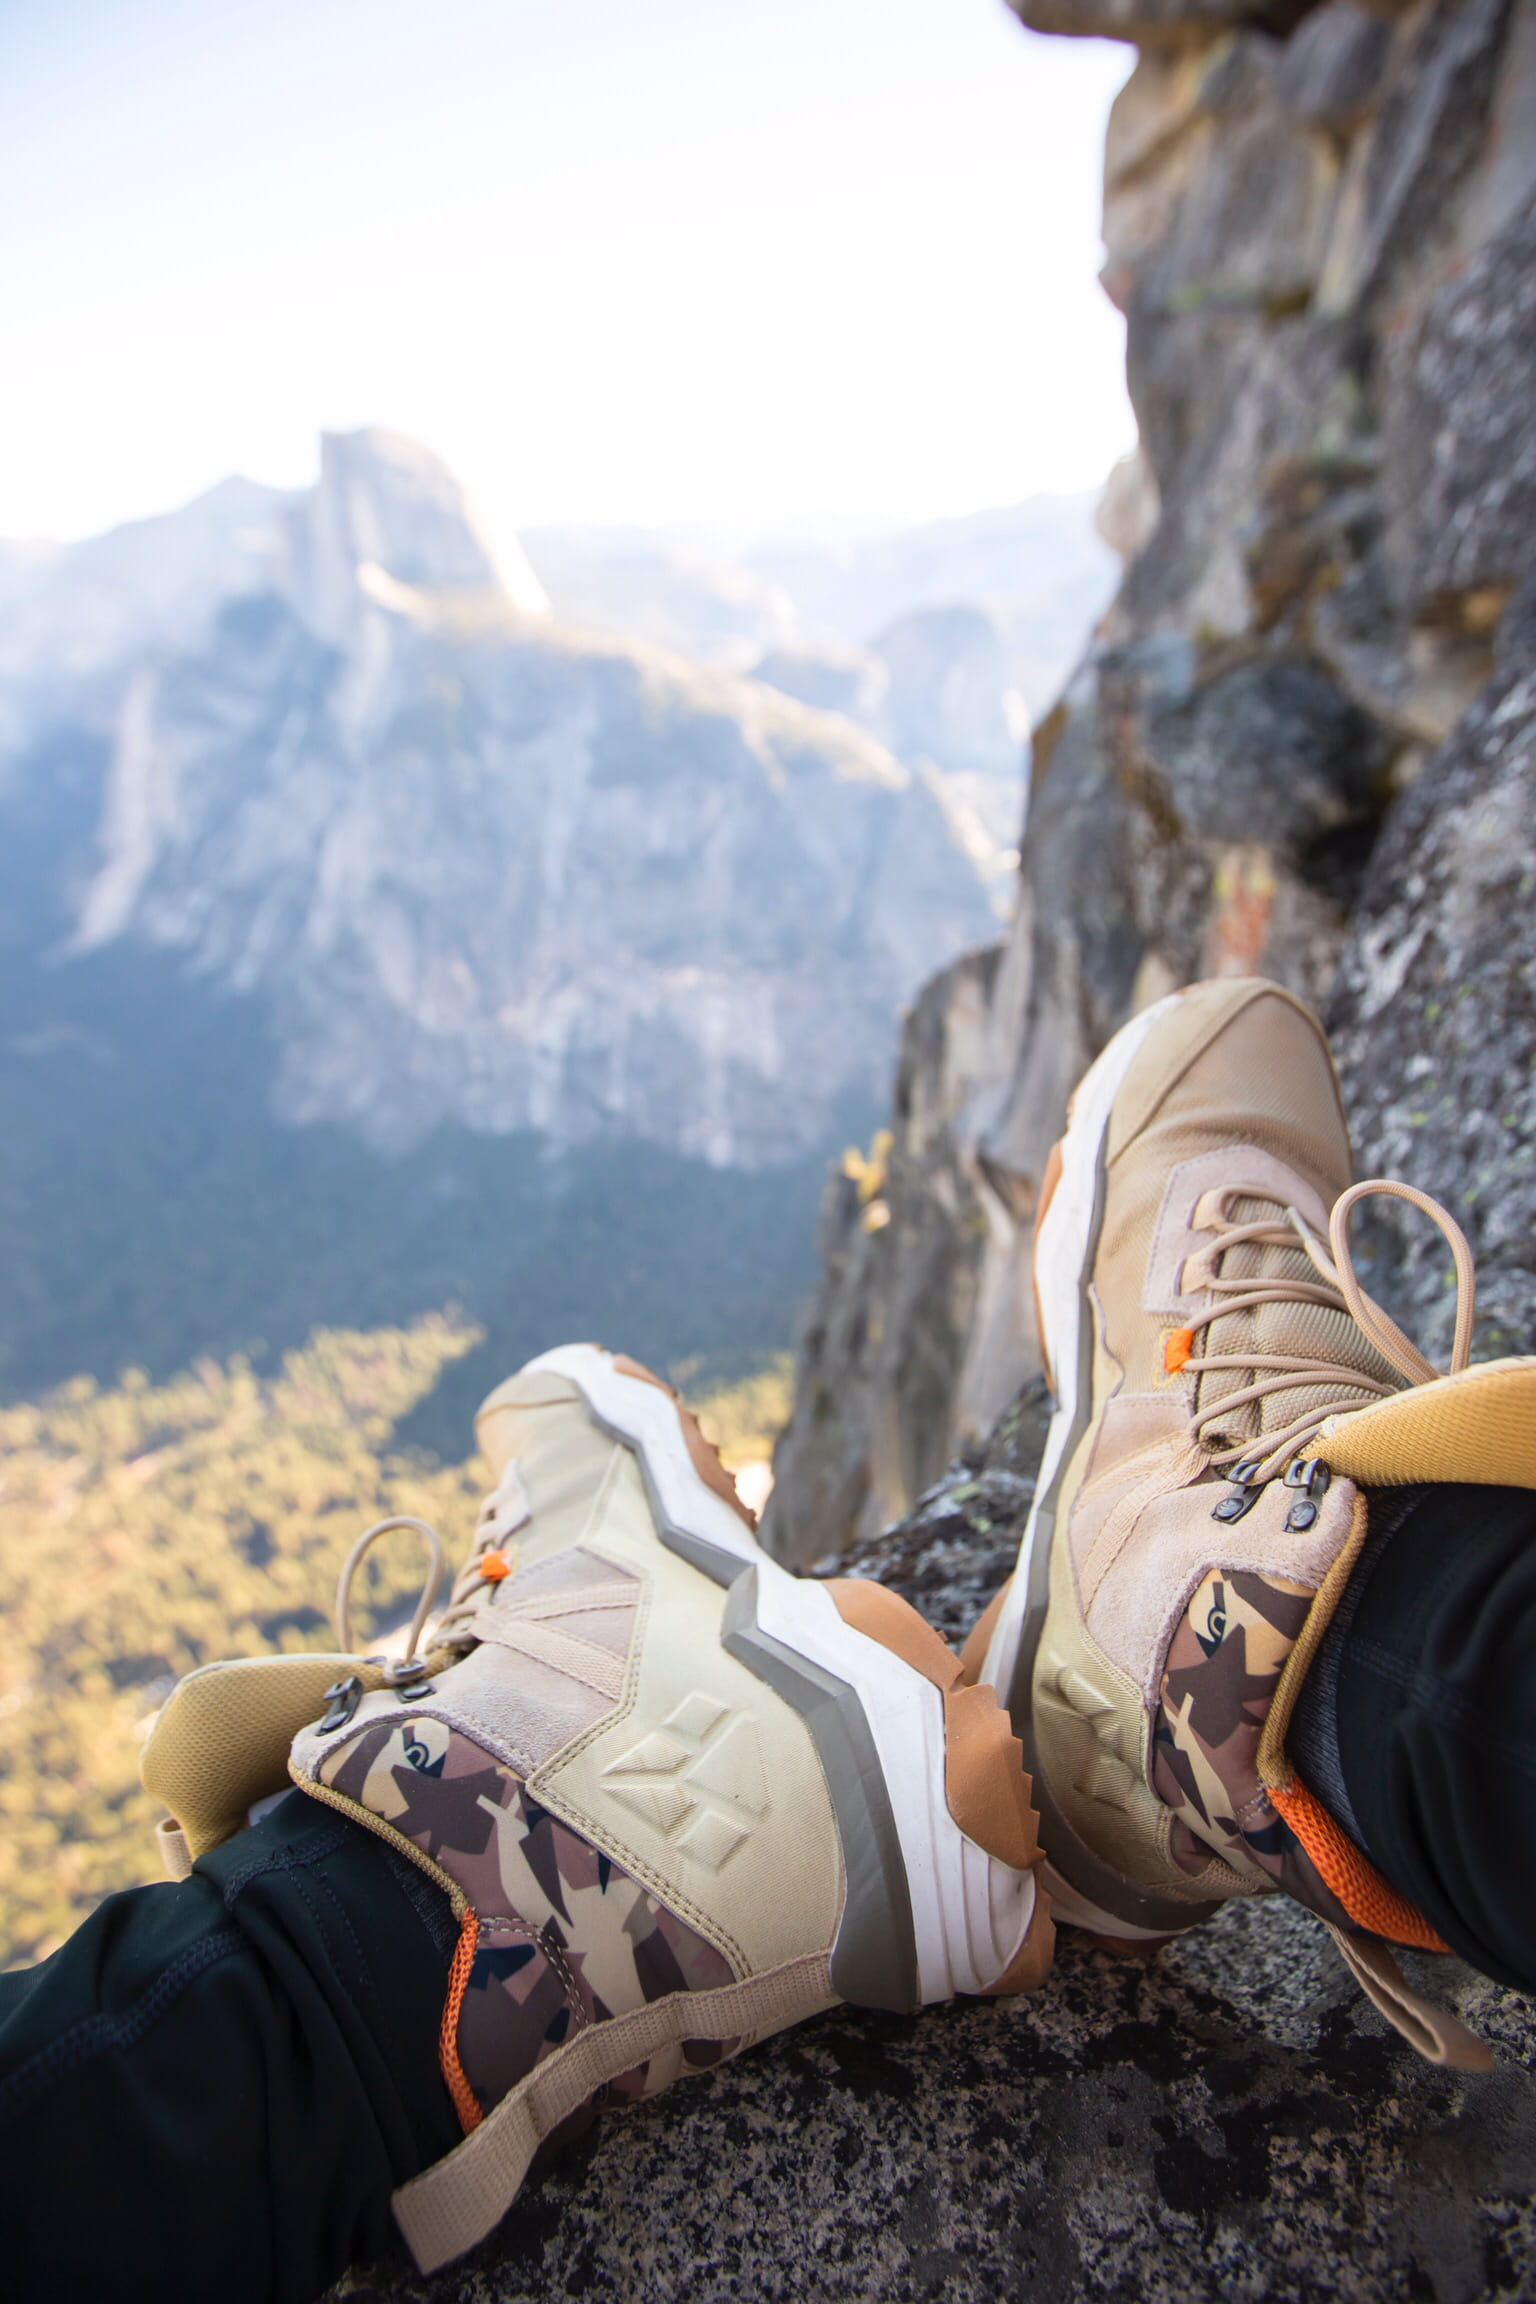 Wallpaper person sitting on rock near gray fault-block mountain, shoe, apparel